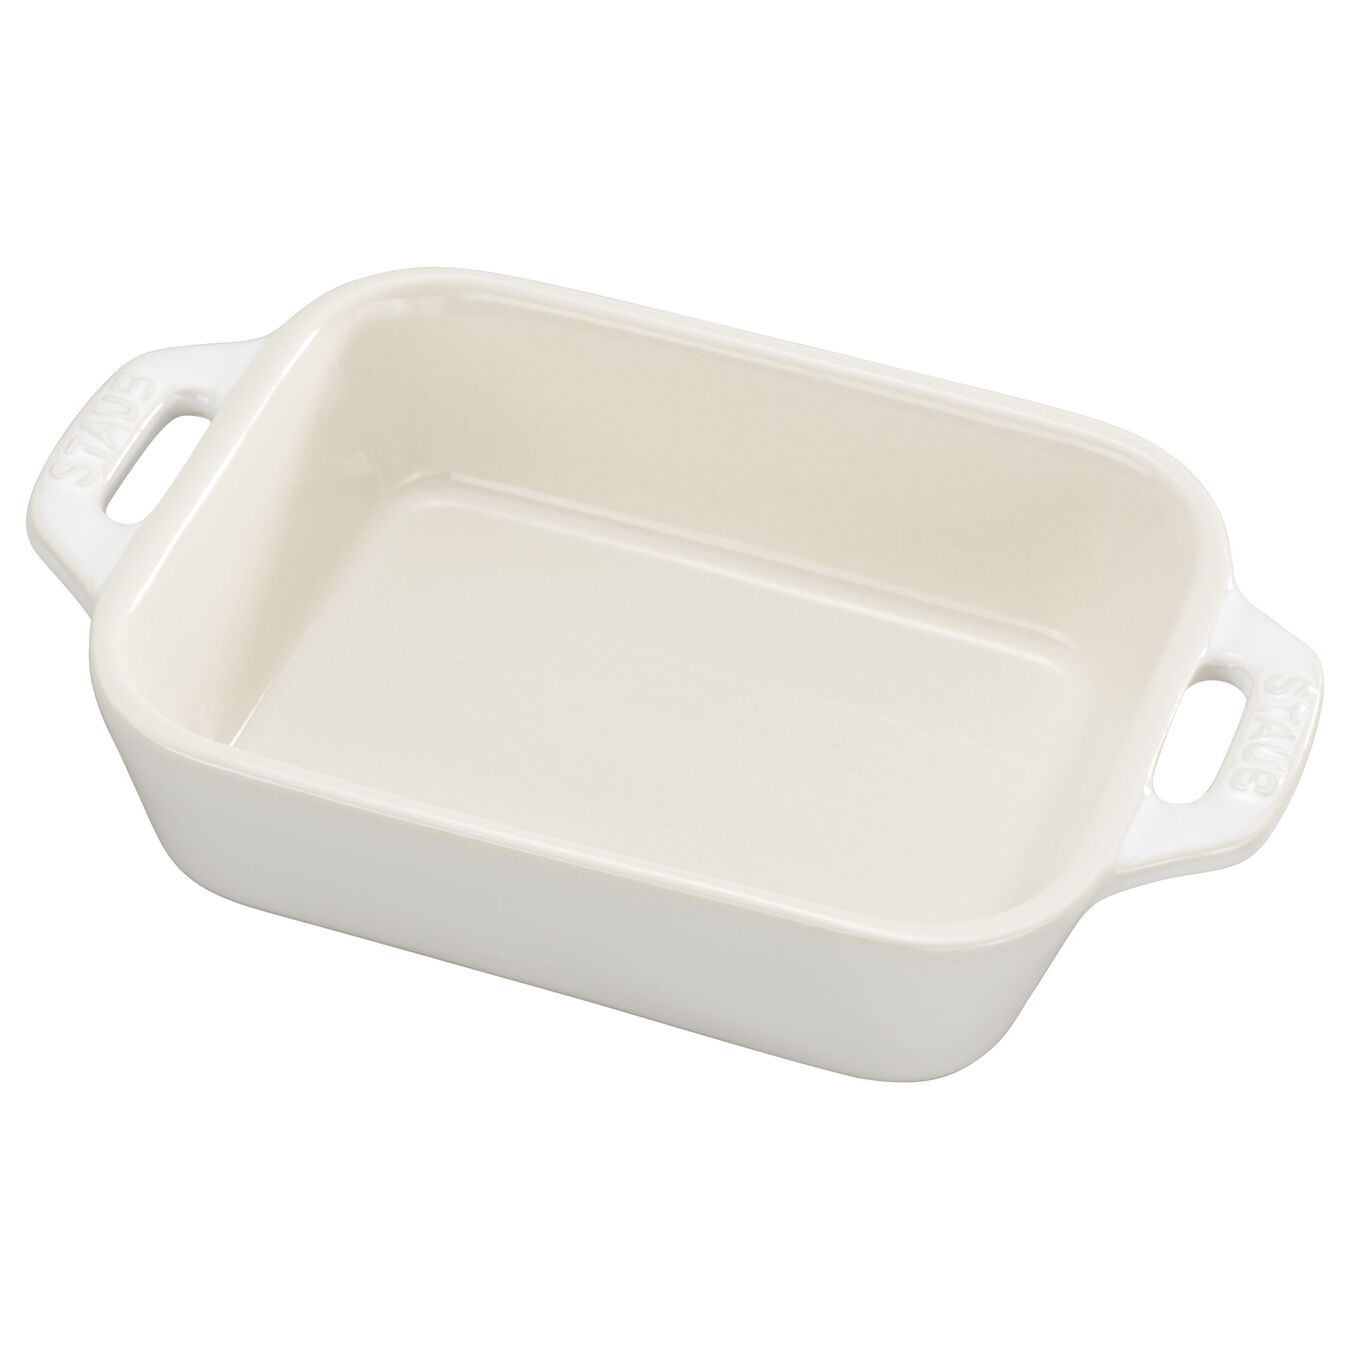 19 cm x 12 cm rectangular Ceramic Oven dish ivory-white,,large 2